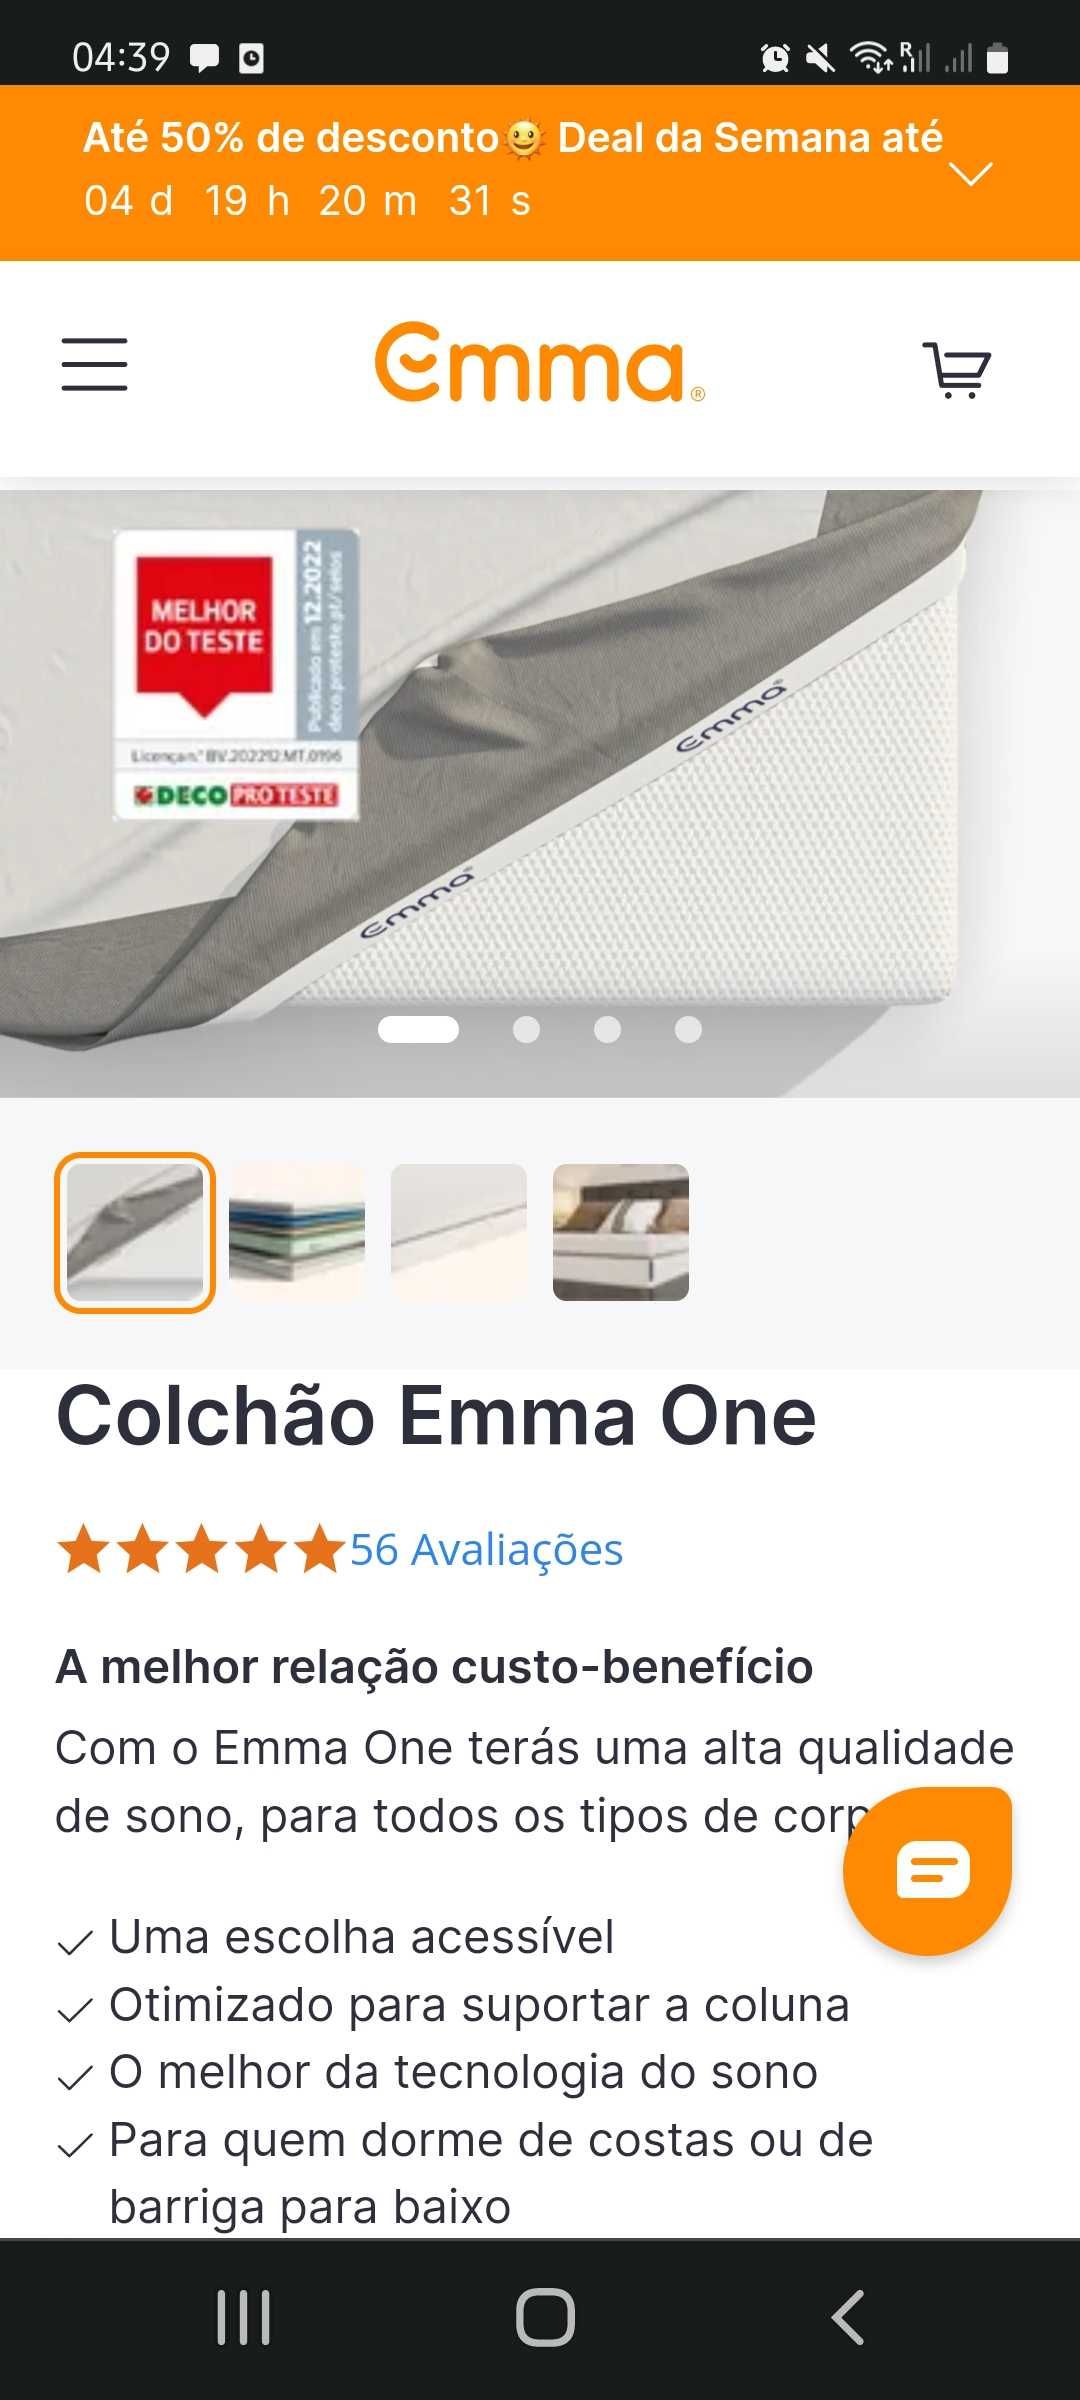 EMMA One colchão mattress